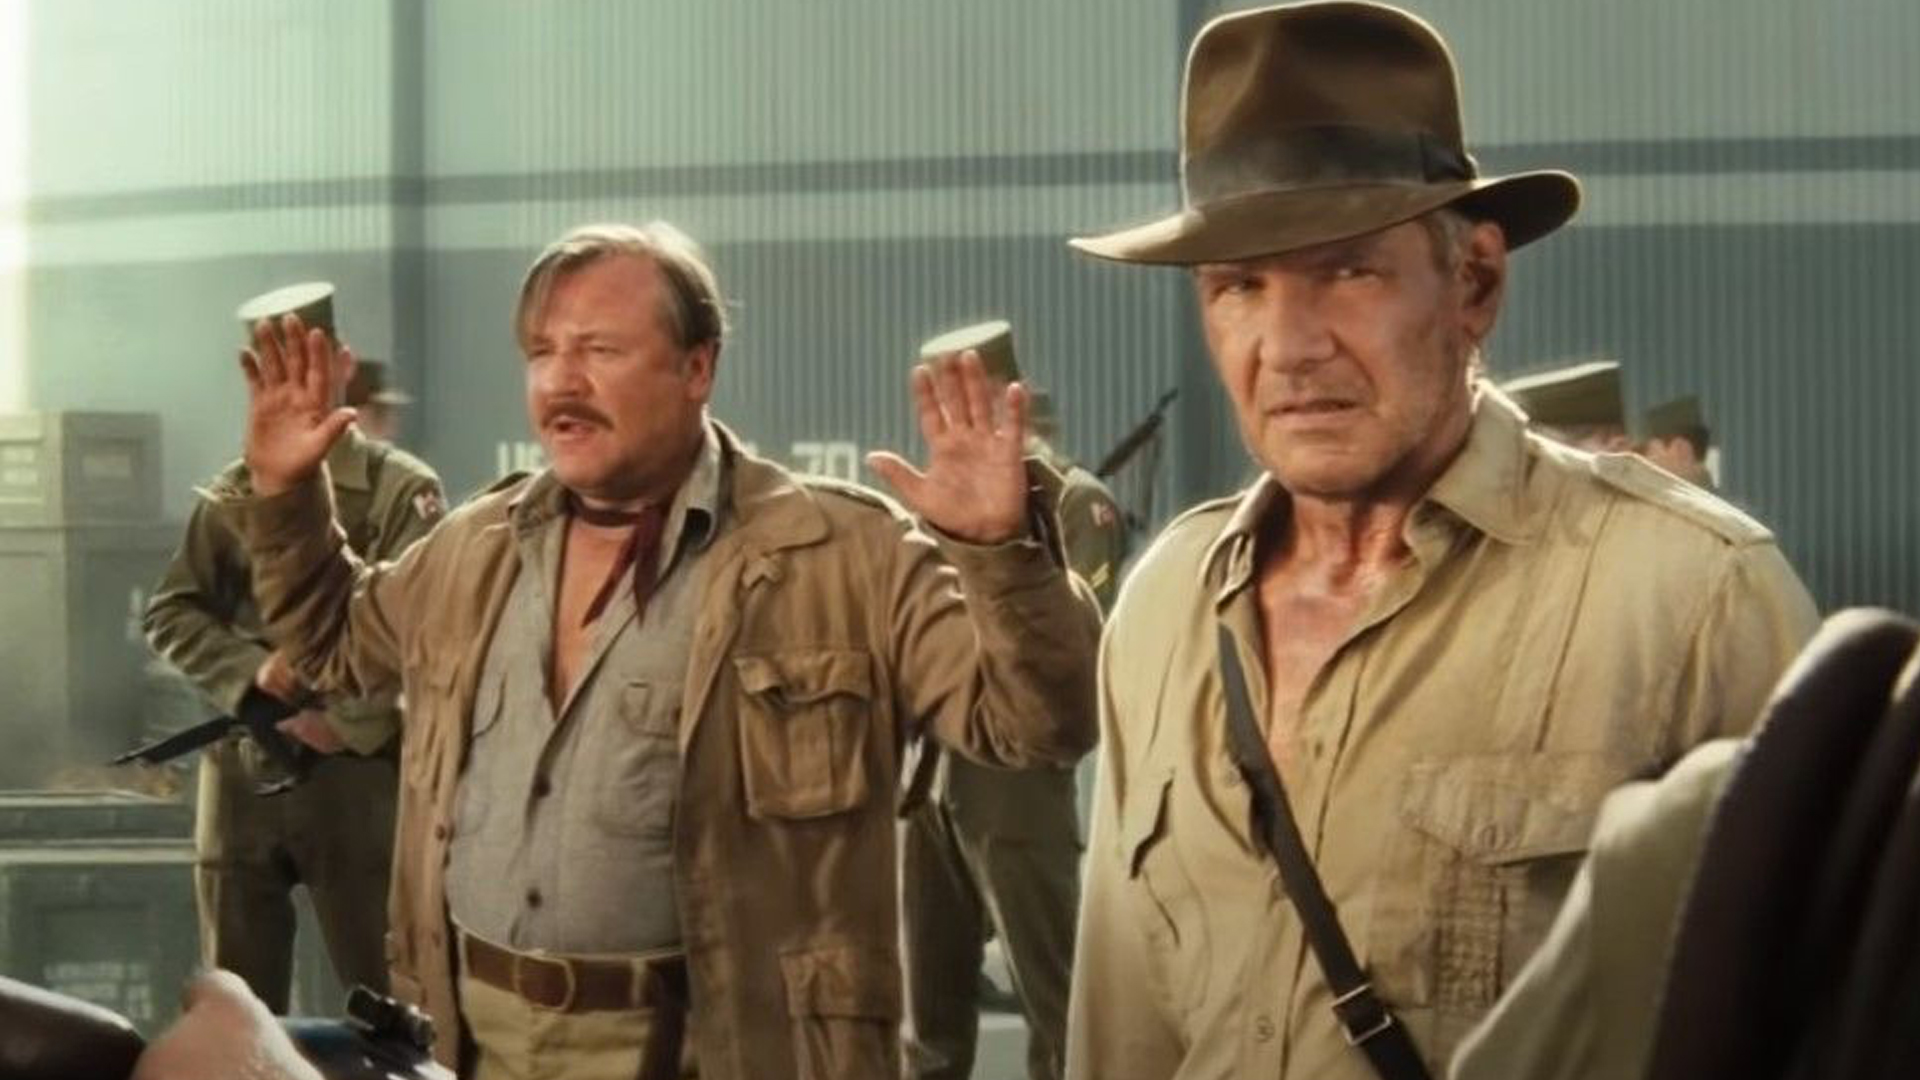 Indiana Jones and The Kingdom of the Crystal Skull